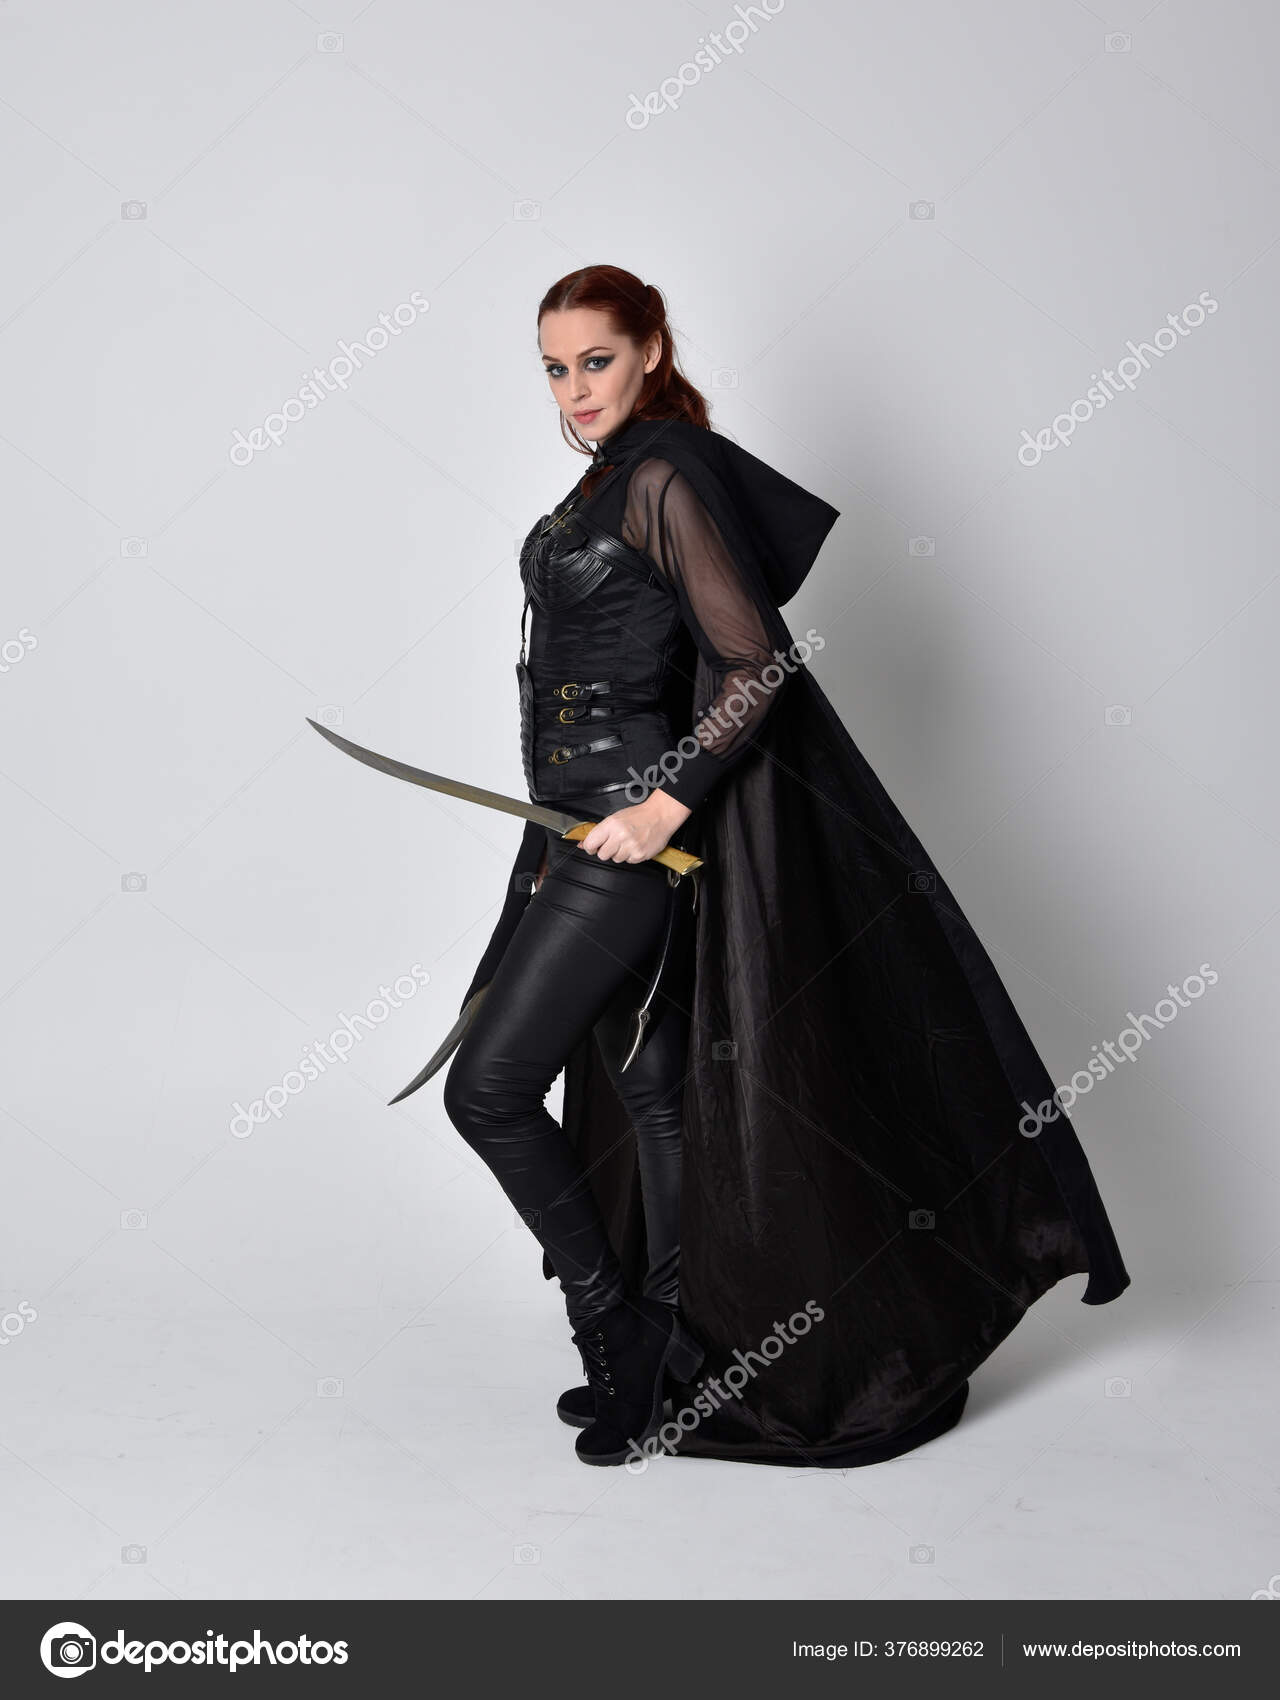 Female Assassin Costume